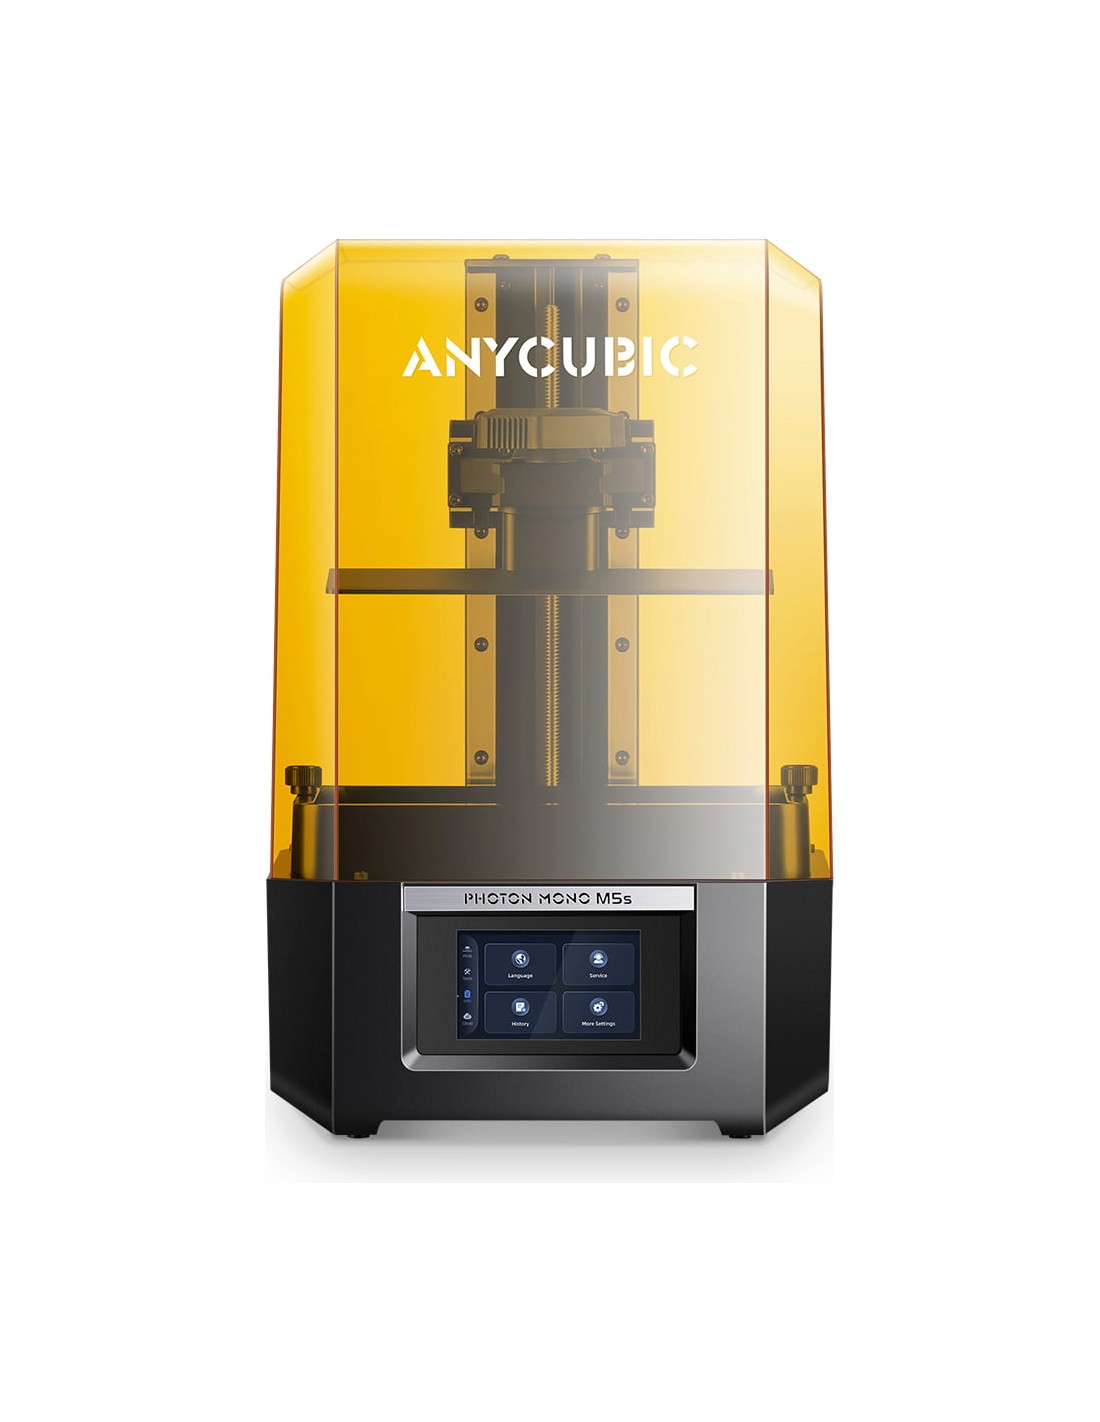 Anycubic Photon Mono SE 2K LCD Resin 3D Printer